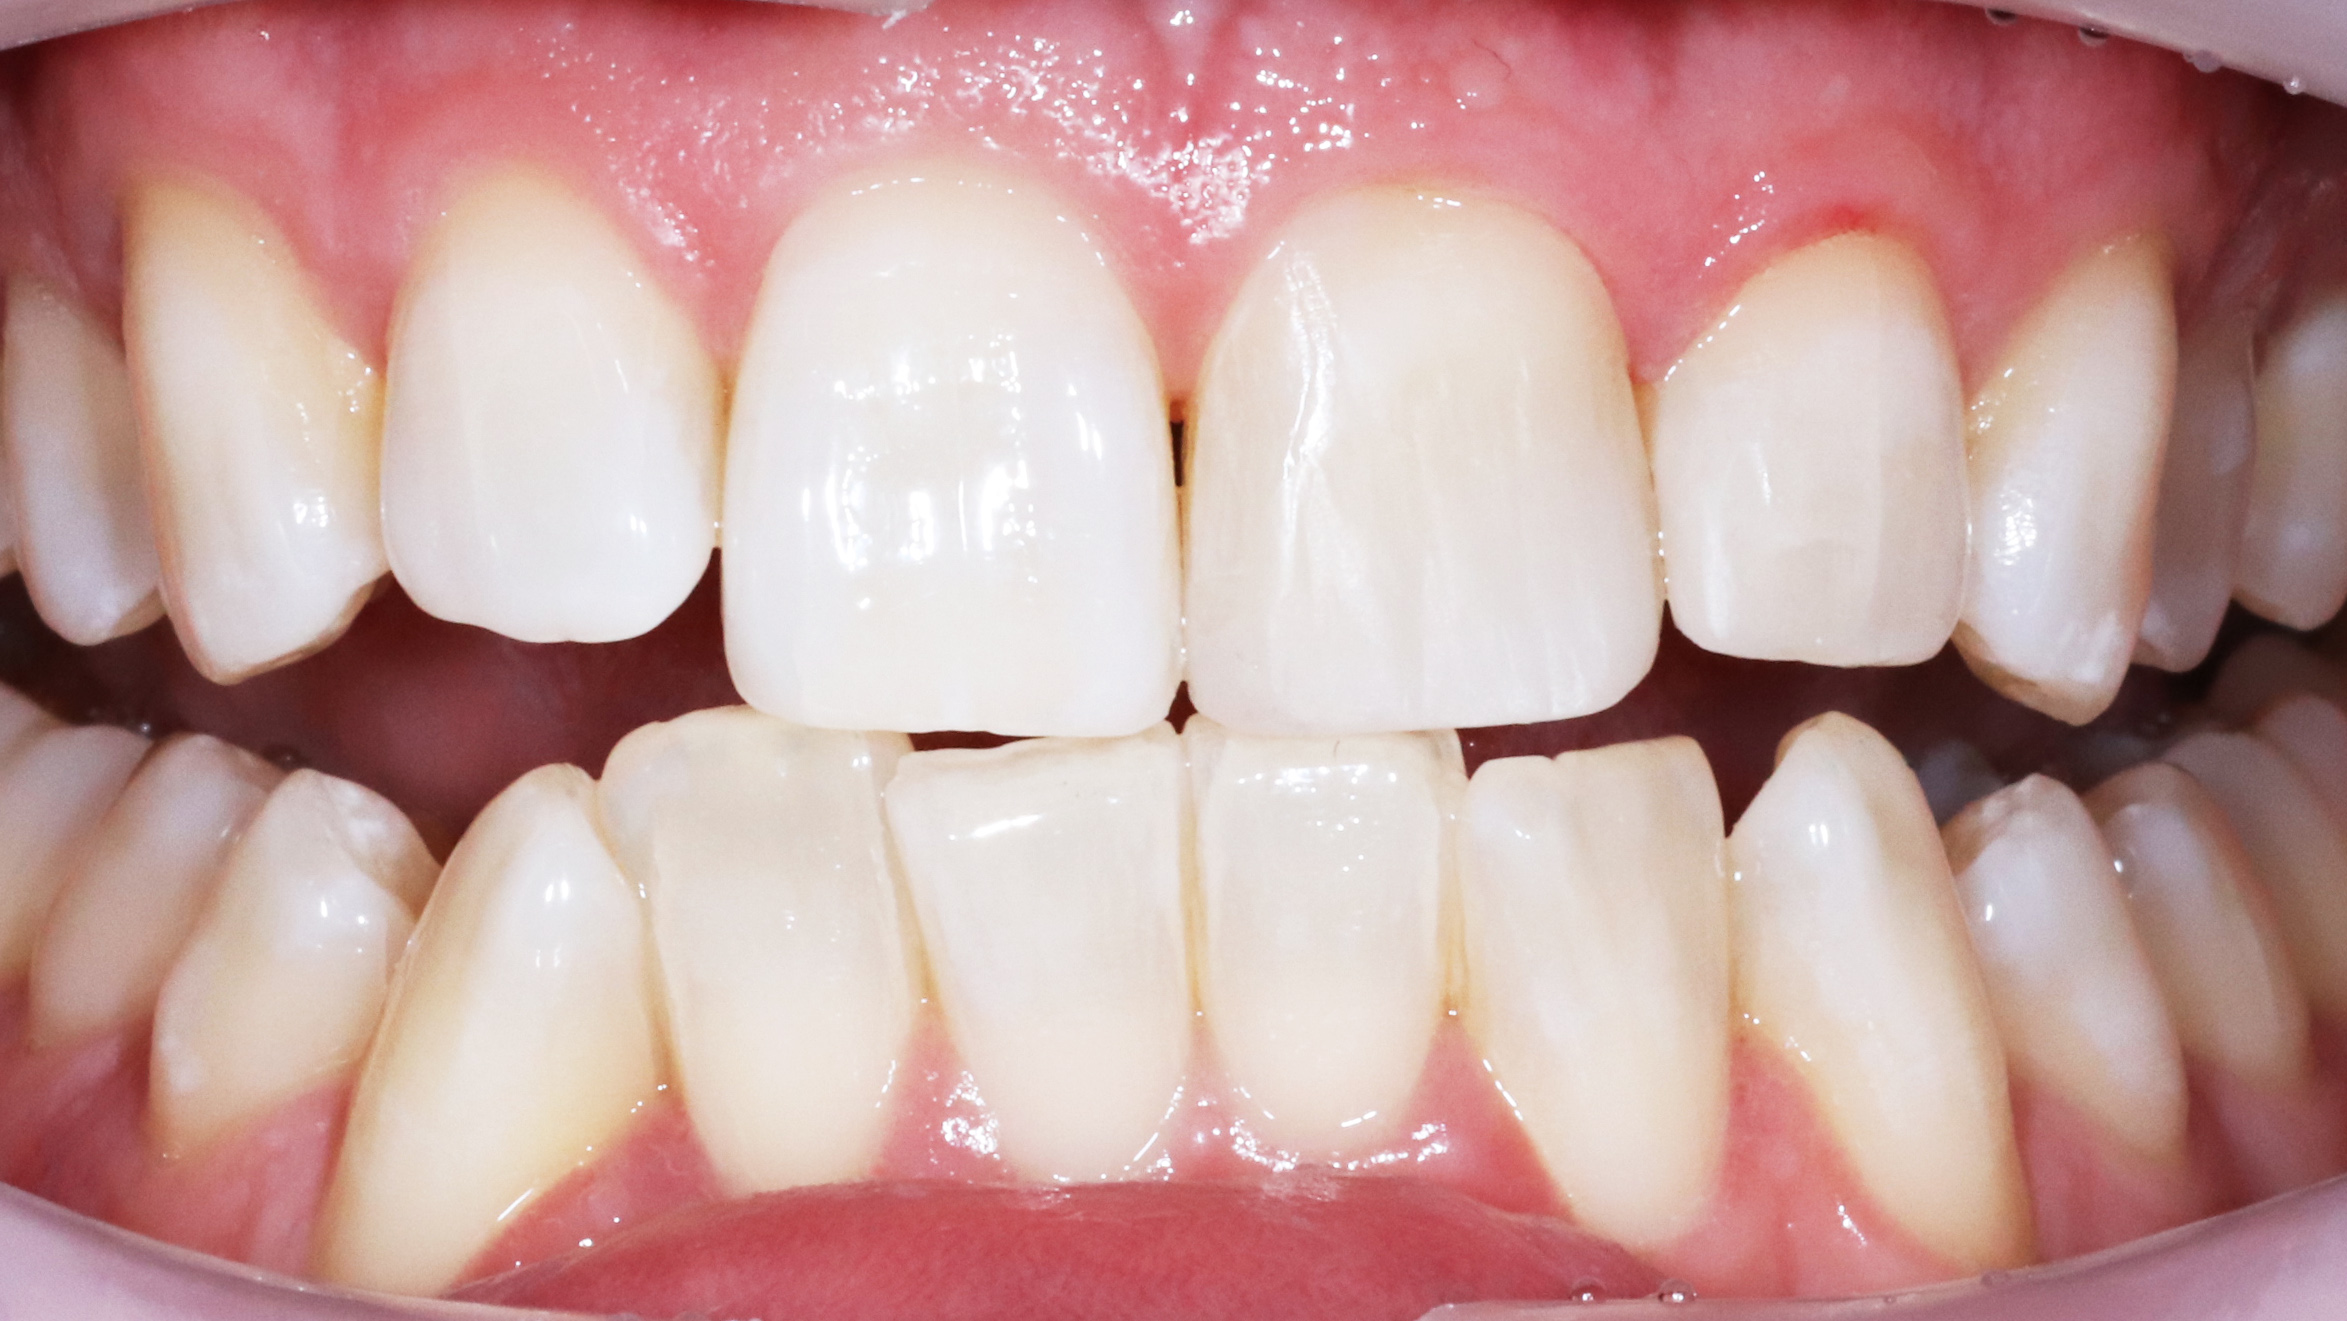 bleaching-tooth-whitening-dental-bleach-treatement-result-after